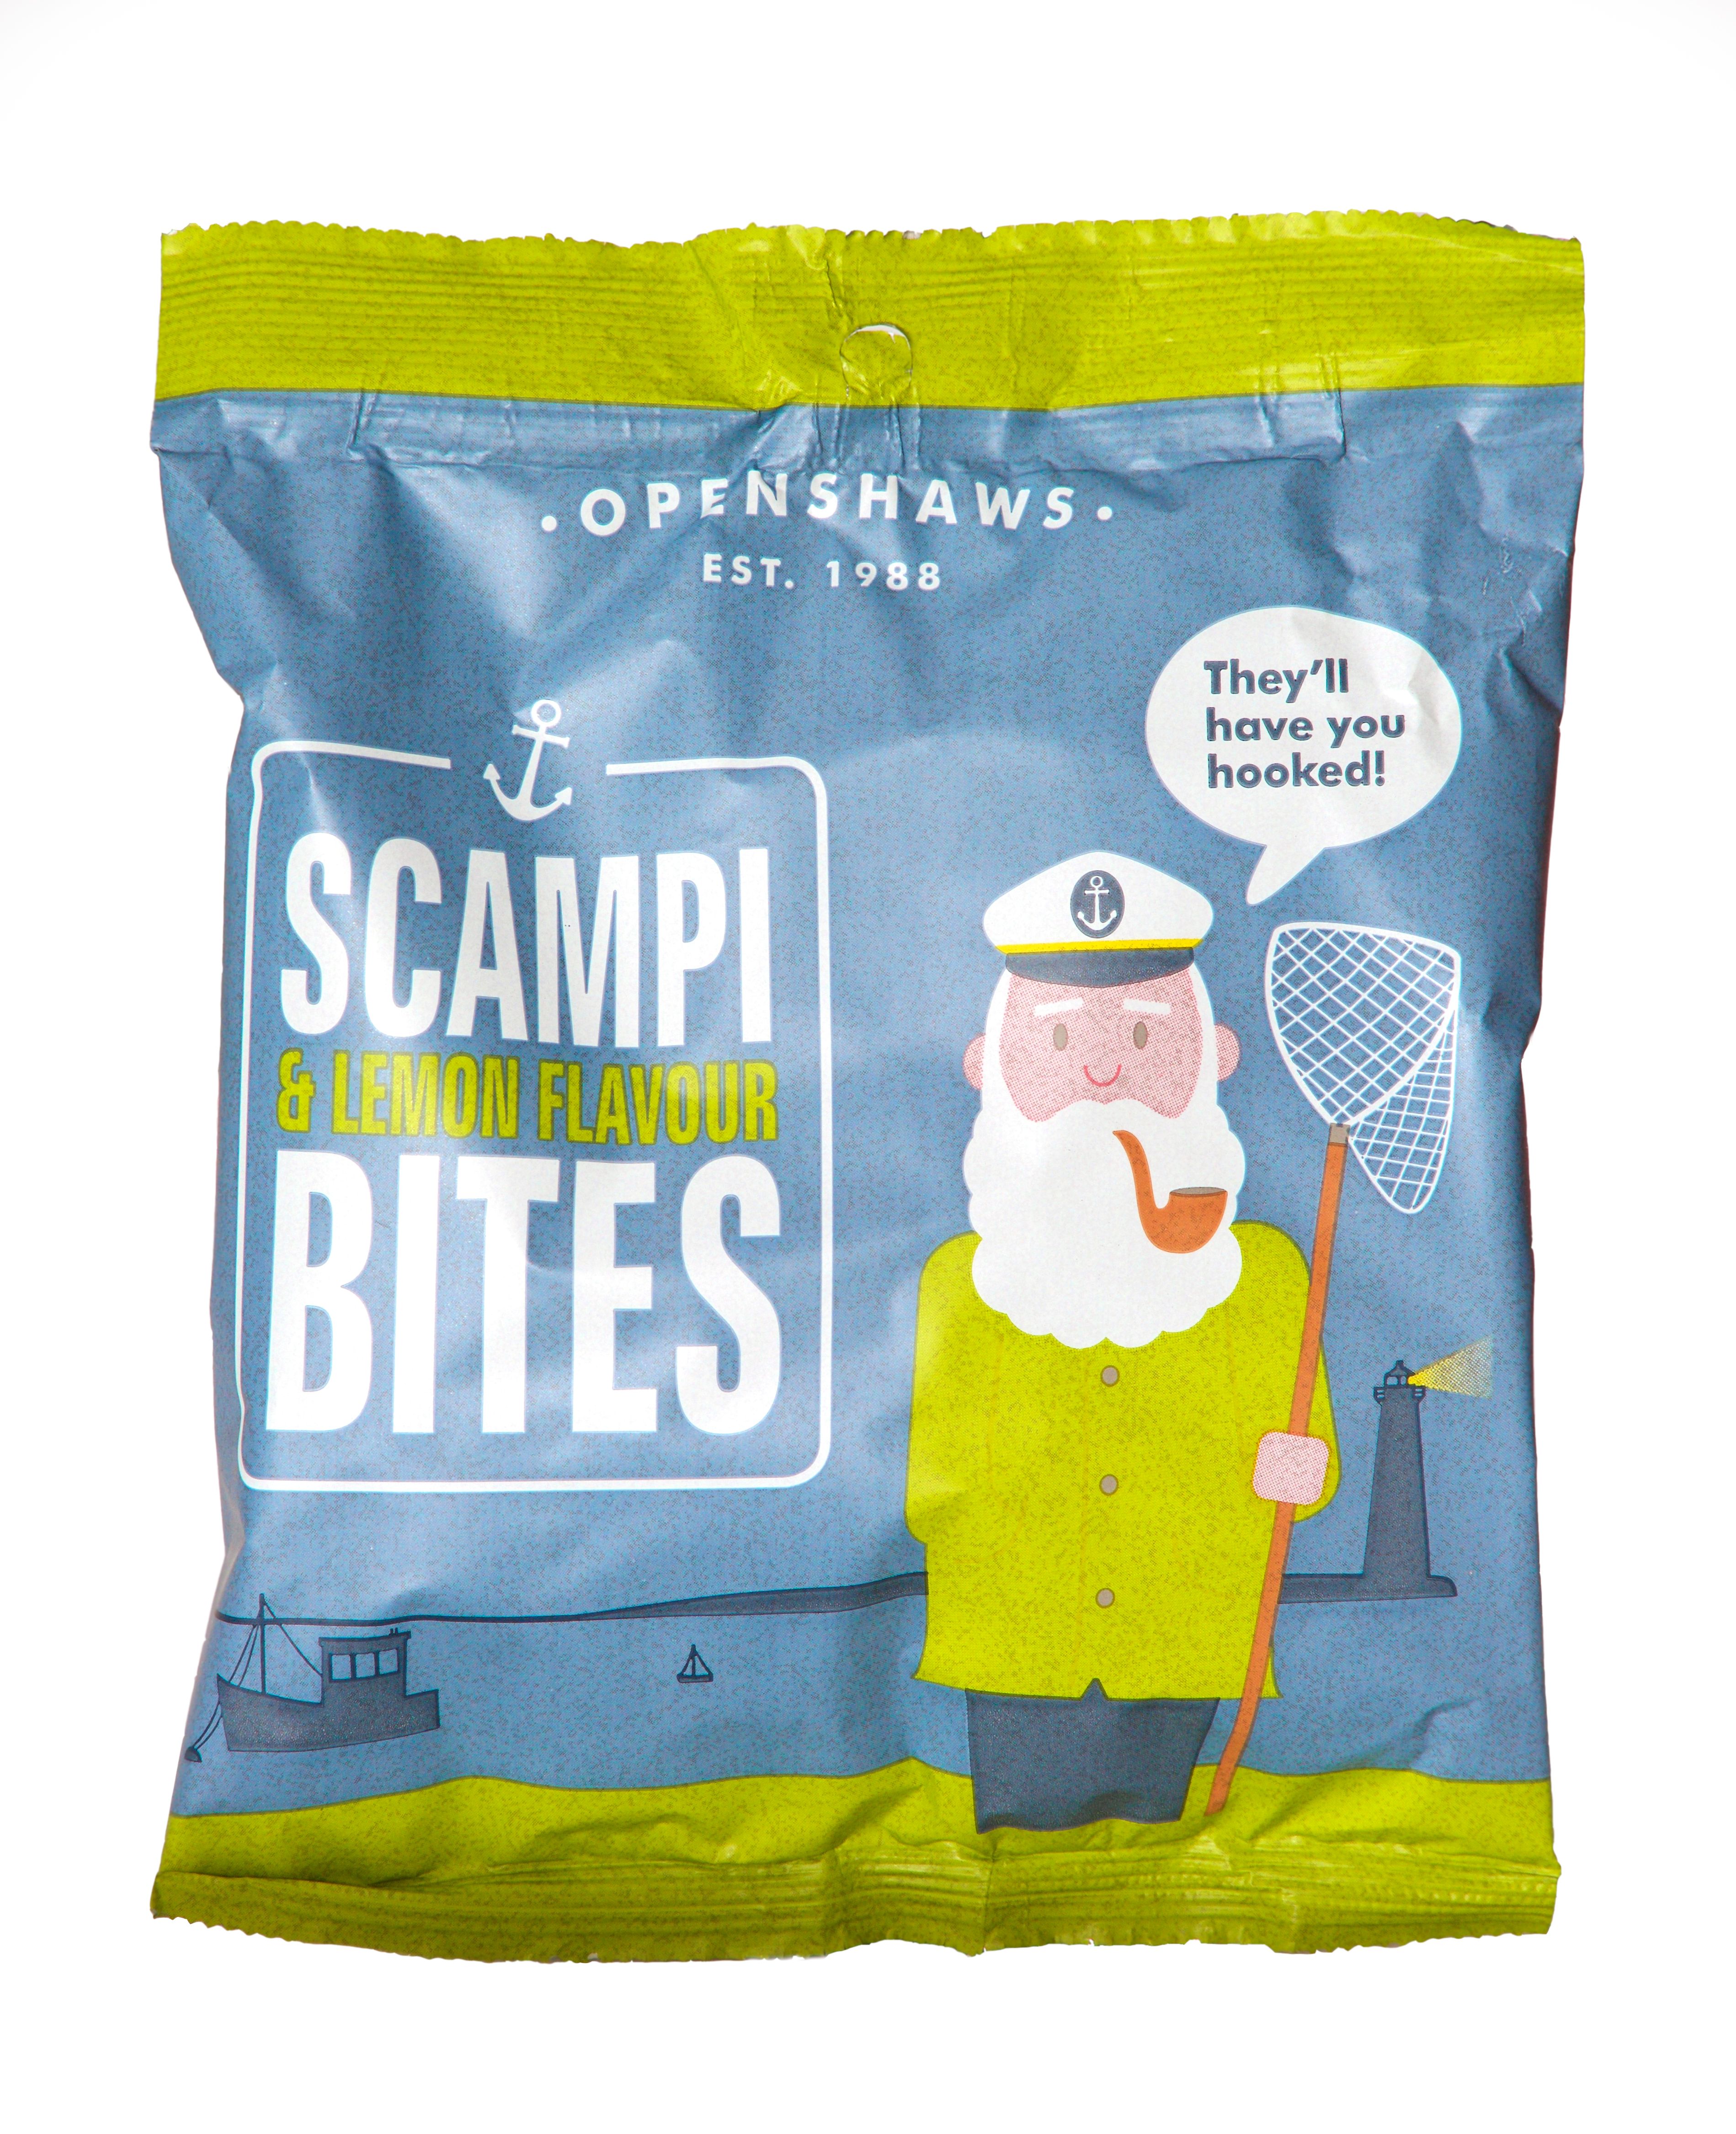 Openshaws Scampi & Lemon Bites